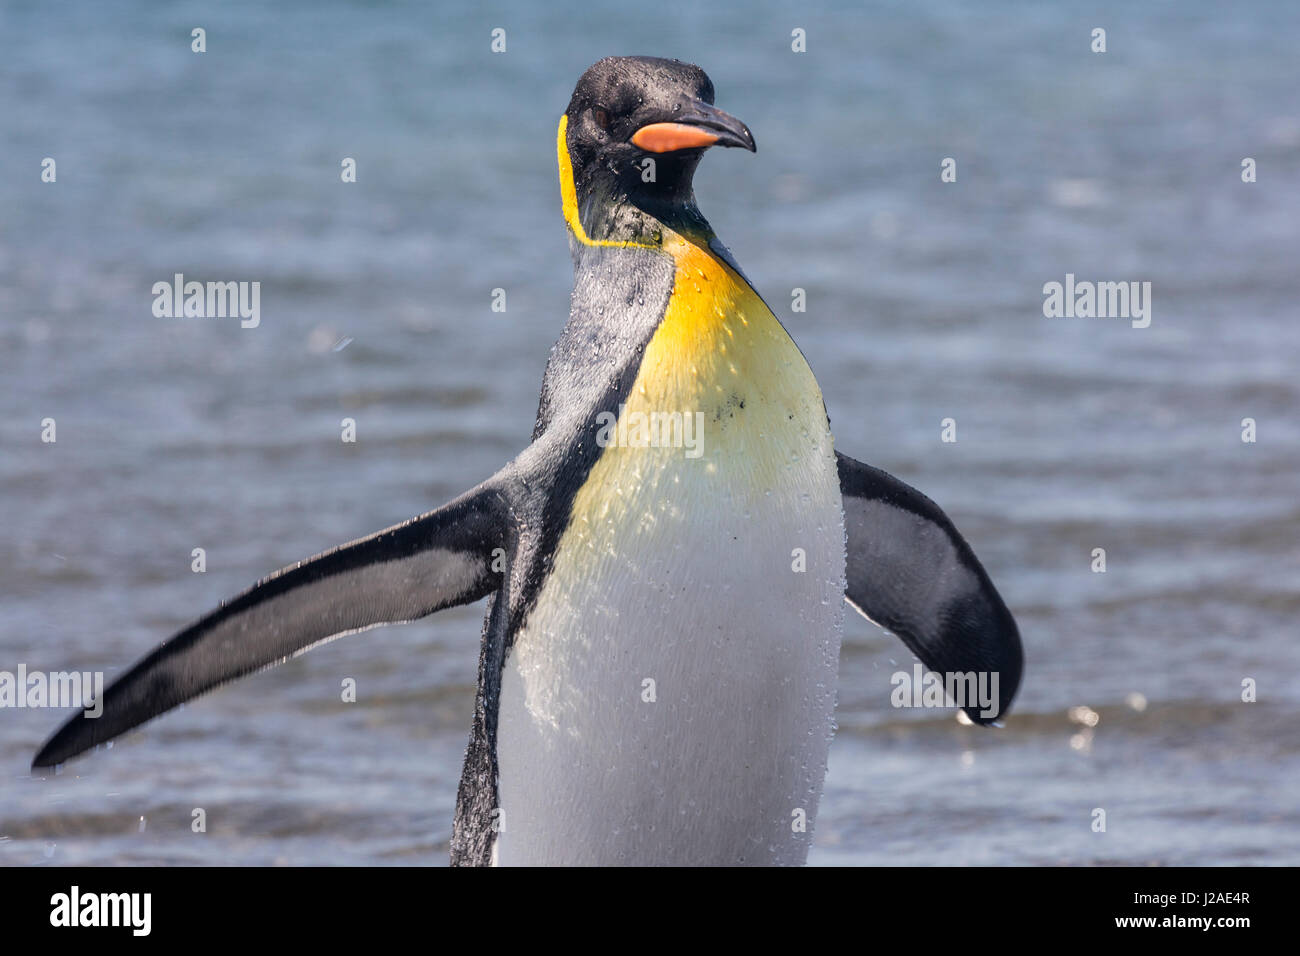 South Georgia Island, Salisbury Plains. König Pinguin aus Wasser. Kredit als Josh Anon / Jaynes Galerie / DanitaDelimont.com Stockfoto